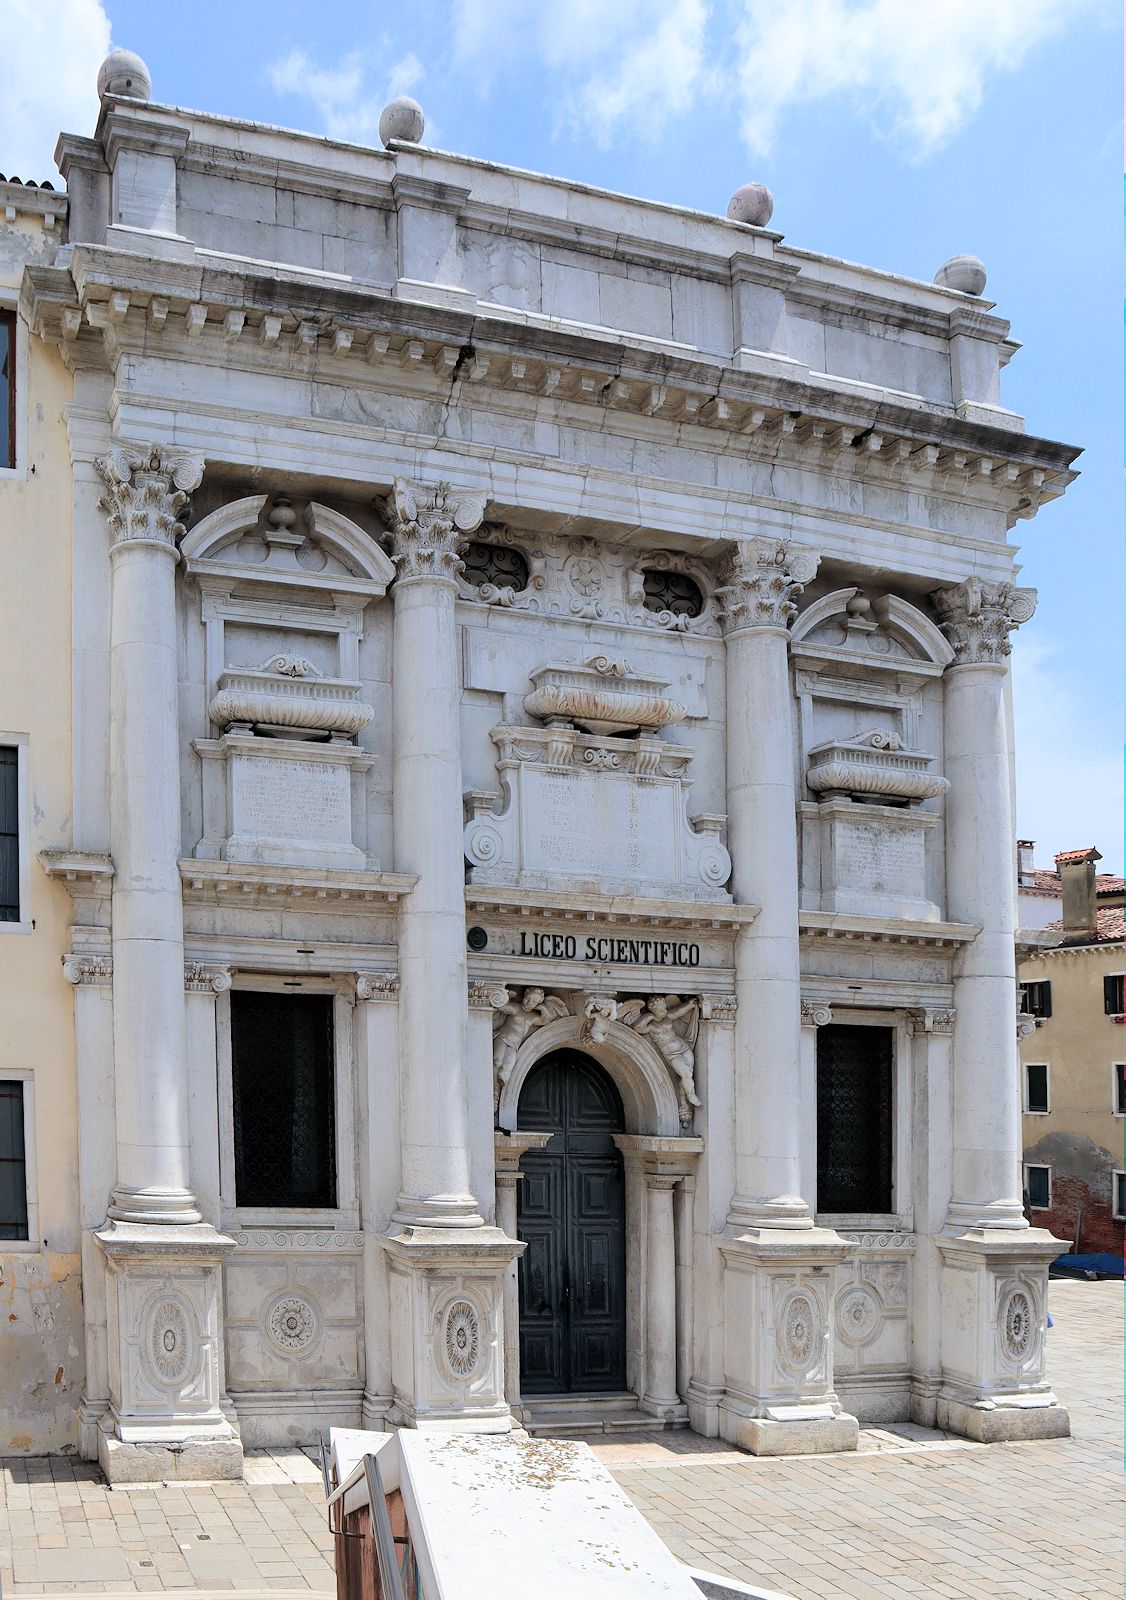 Fassade der ehemaligen Kirche Santa Giustina in Venedig